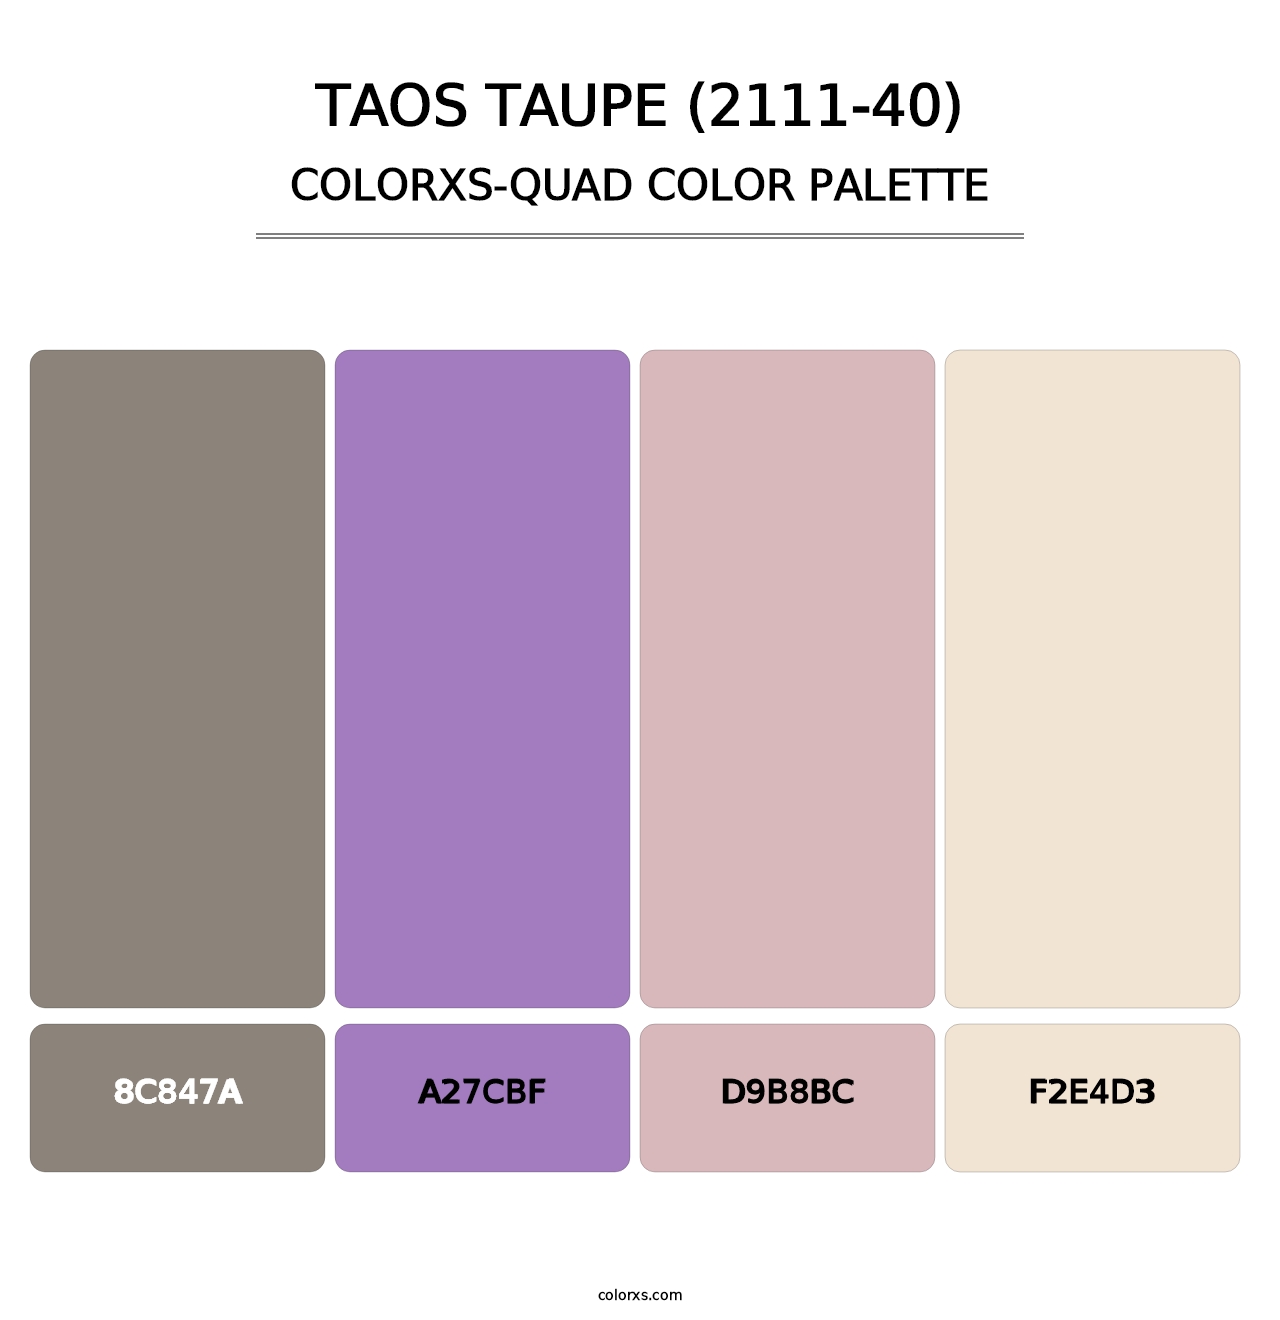 Taos Taupe (2111-40) - Colorxs Quad Palette